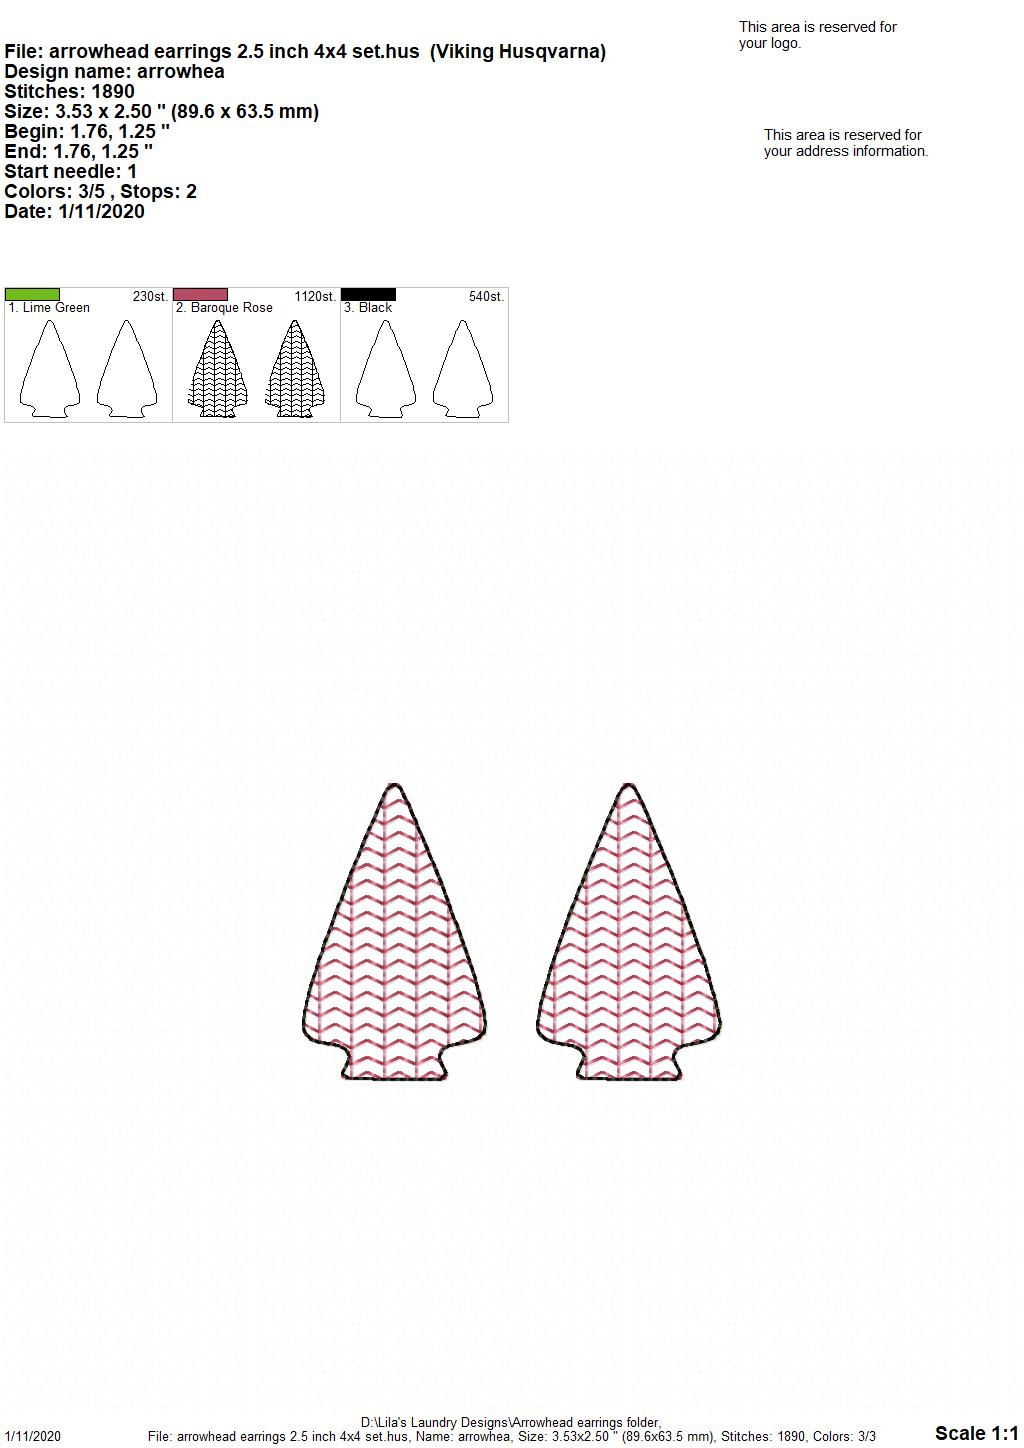 Arrowhead Earrings - 3 sizes - Digital Embroidery Design